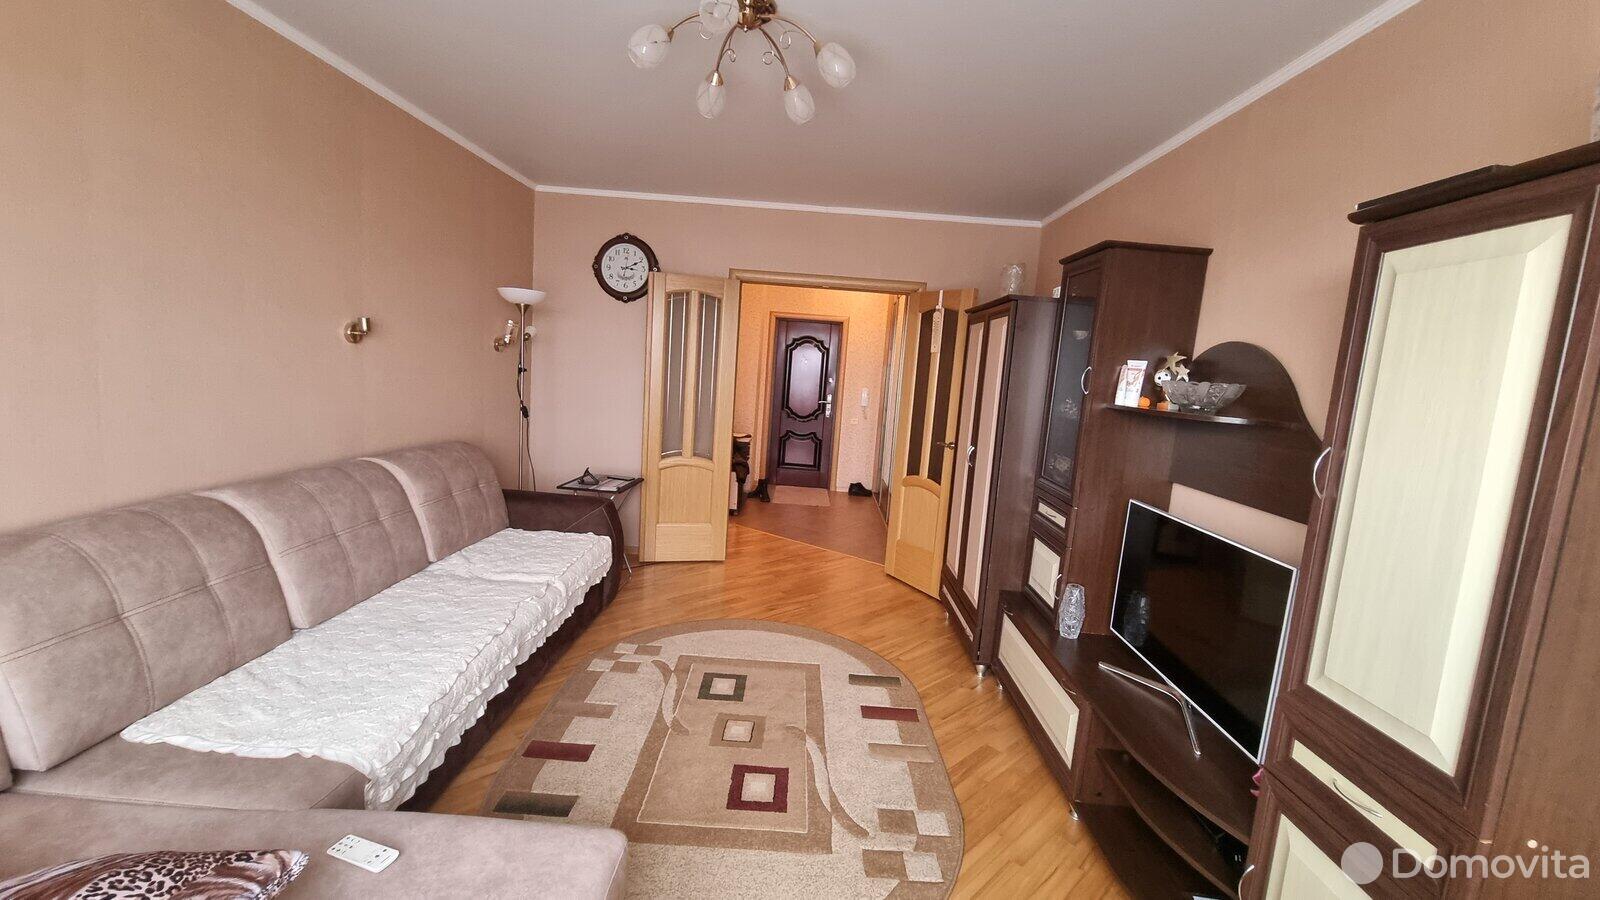 квартира, Борисов, ул. Орджоникидзе, д. 51, стоимость продажи 162 625 р.